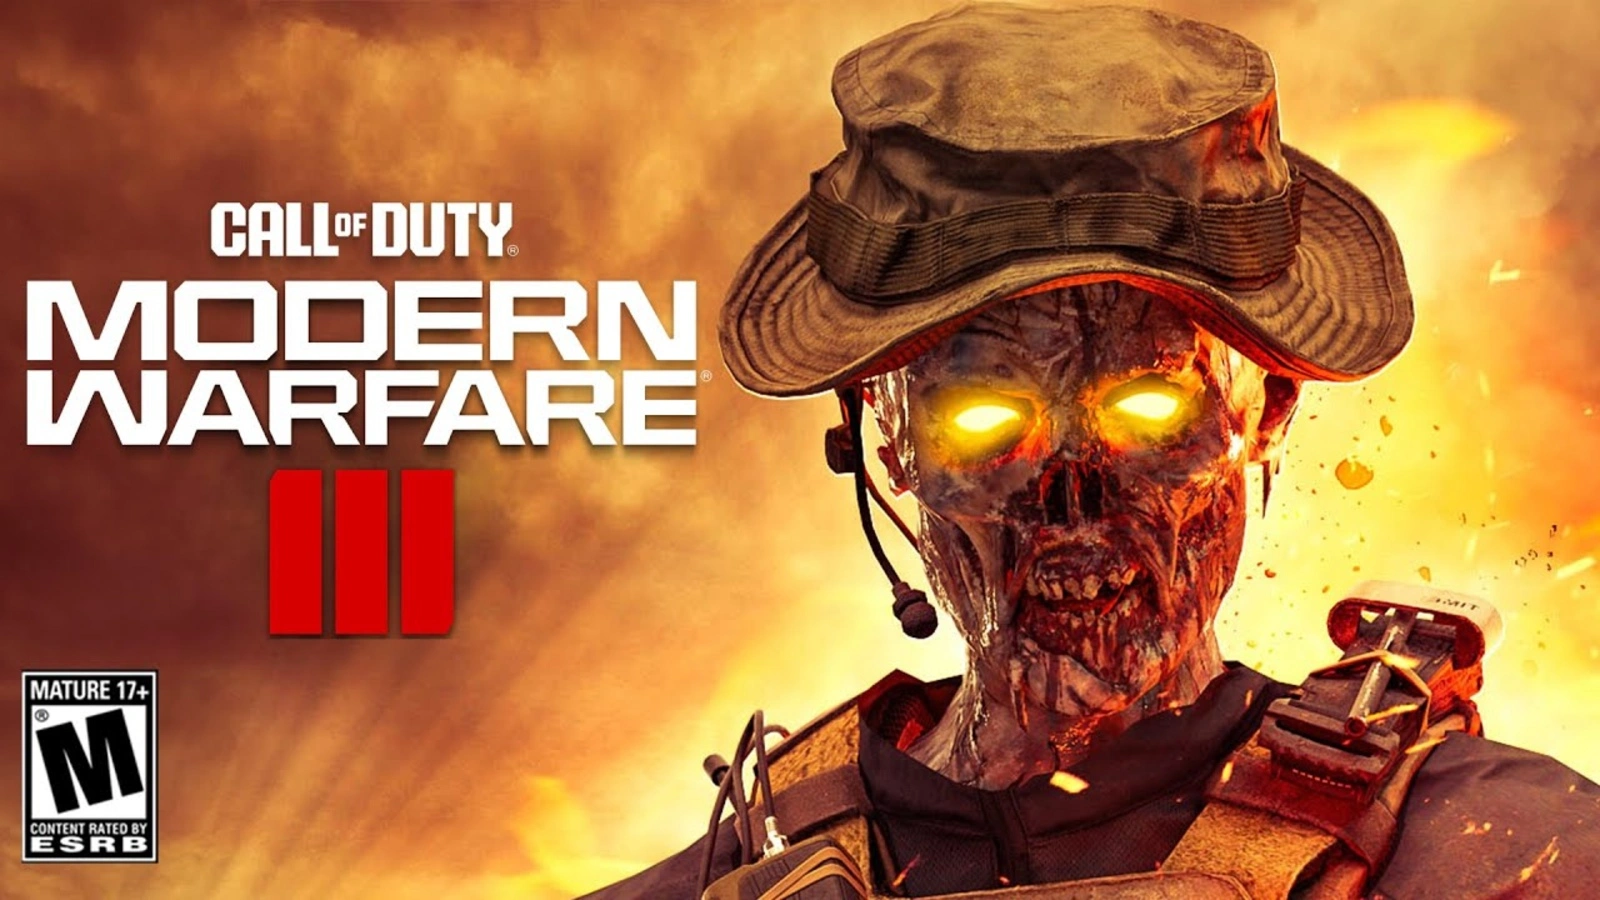 COD Modern Warfare 3 Zombies Gold Enigma camo unlocking issue under investigation